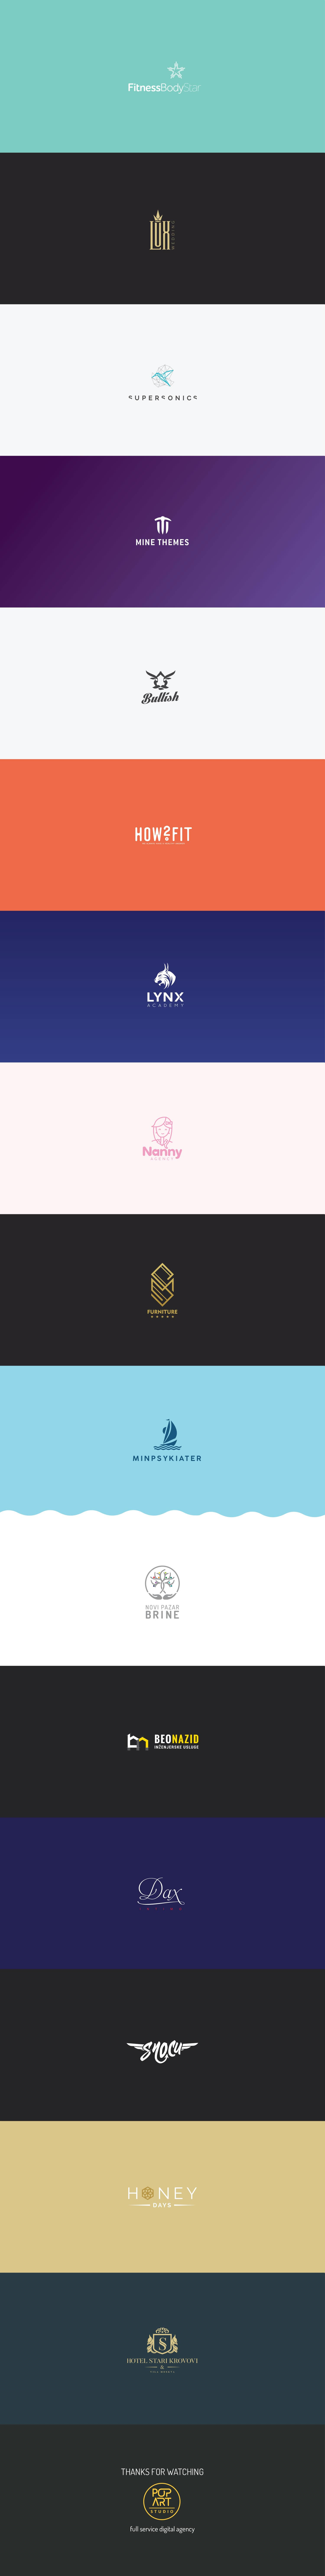 logo design portfolio 2015/2016